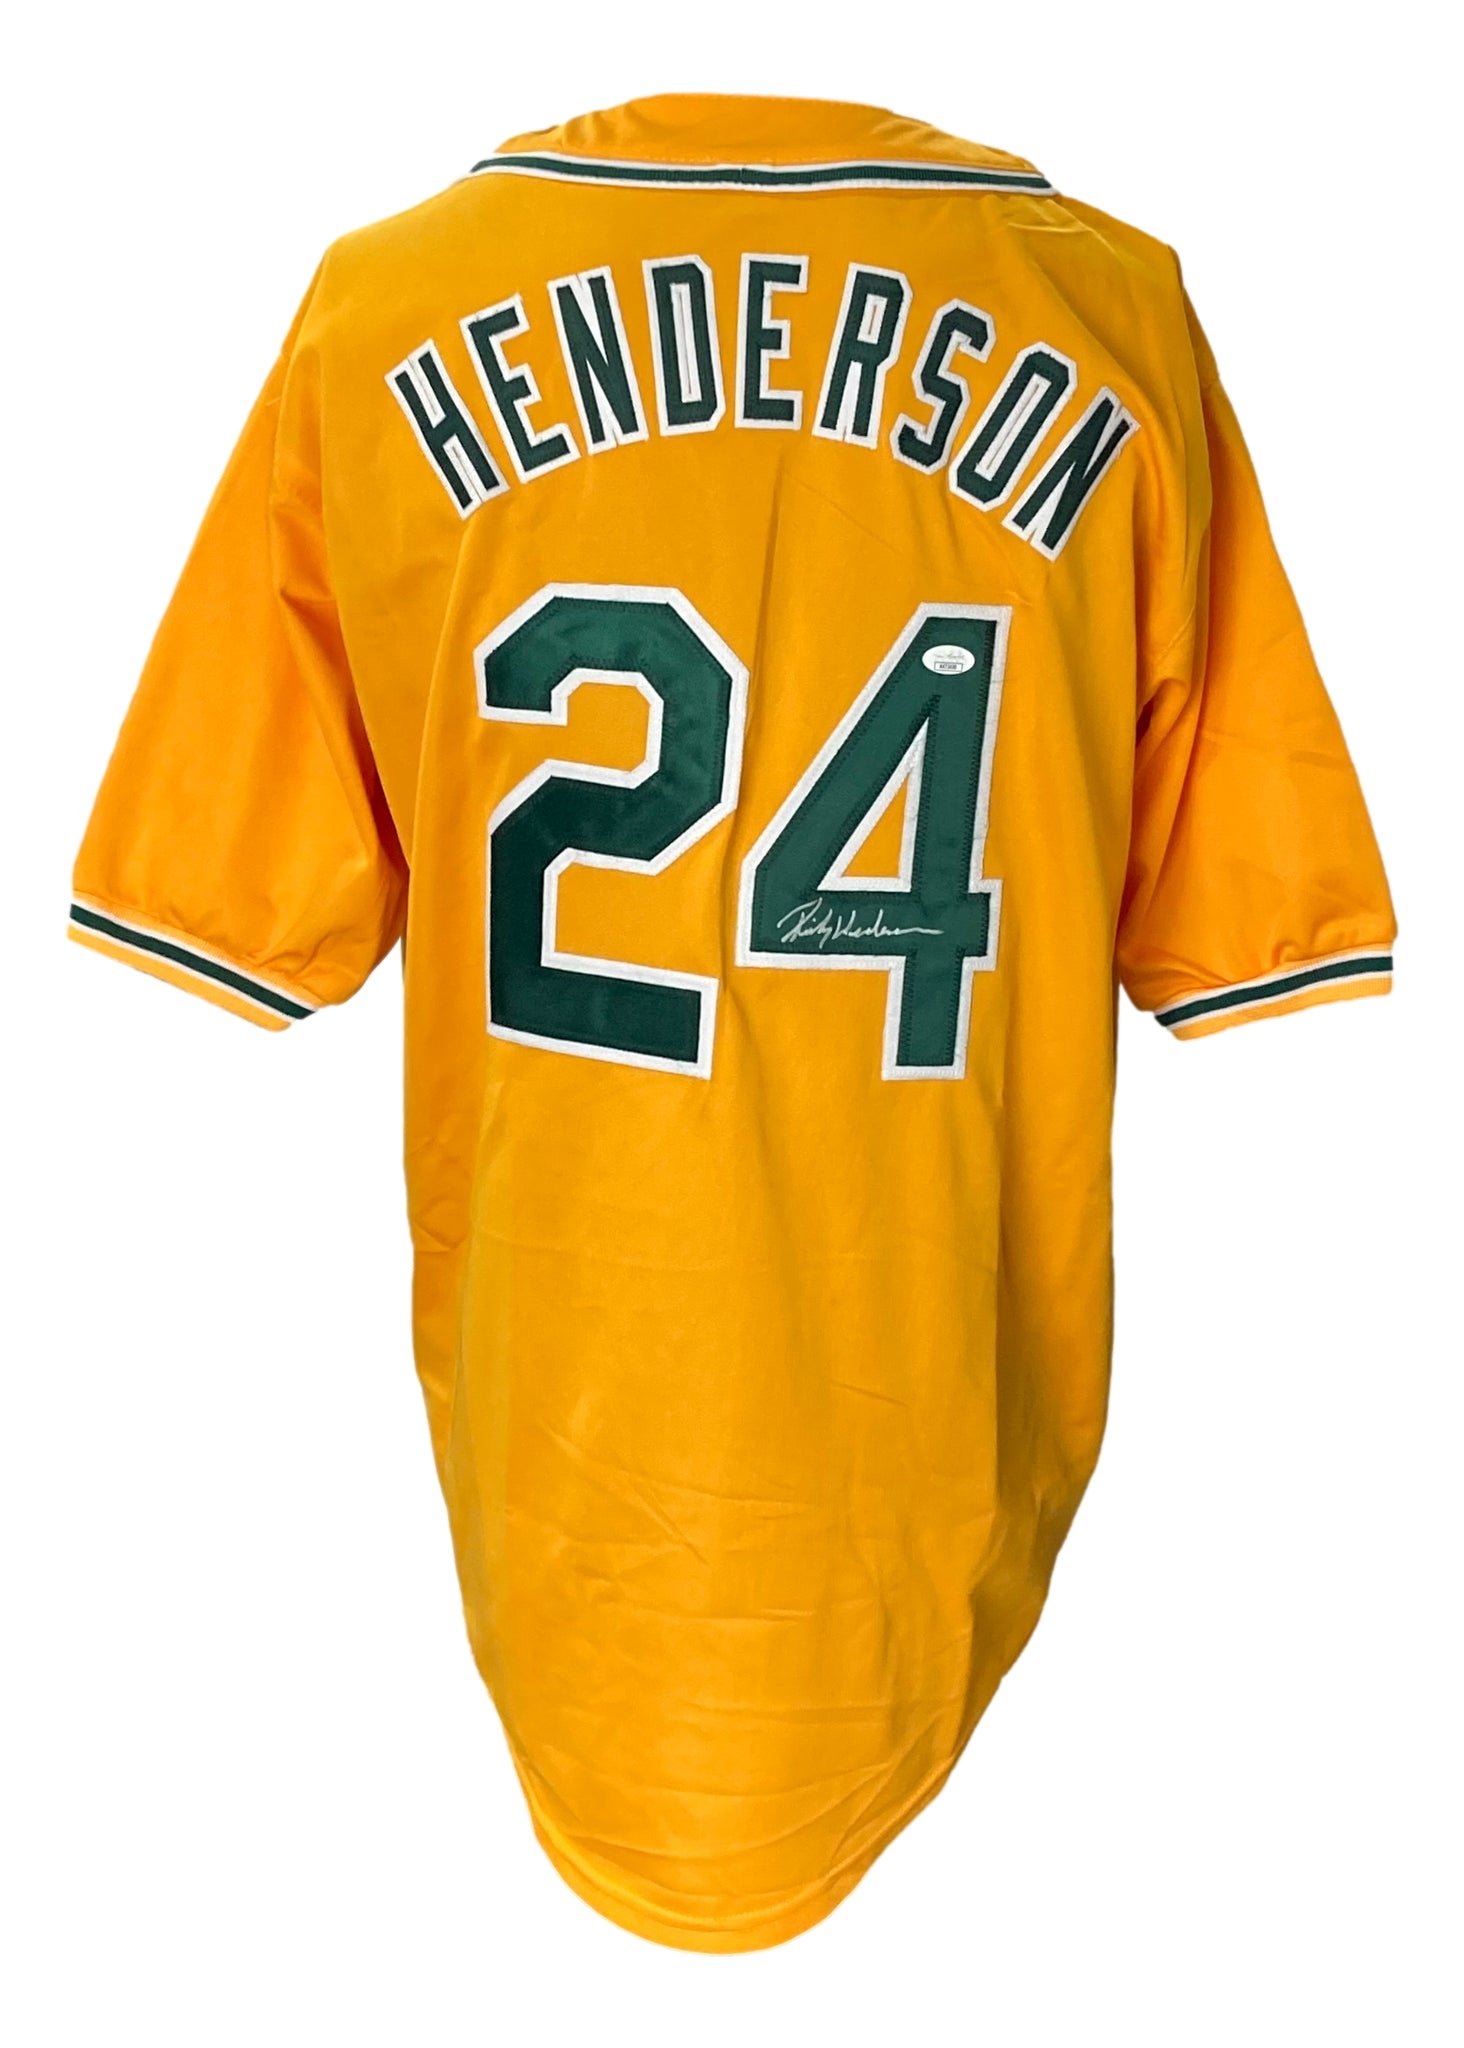 Rickey Henderson Signed Custom Yellow Pro-Style Baseball Jersey